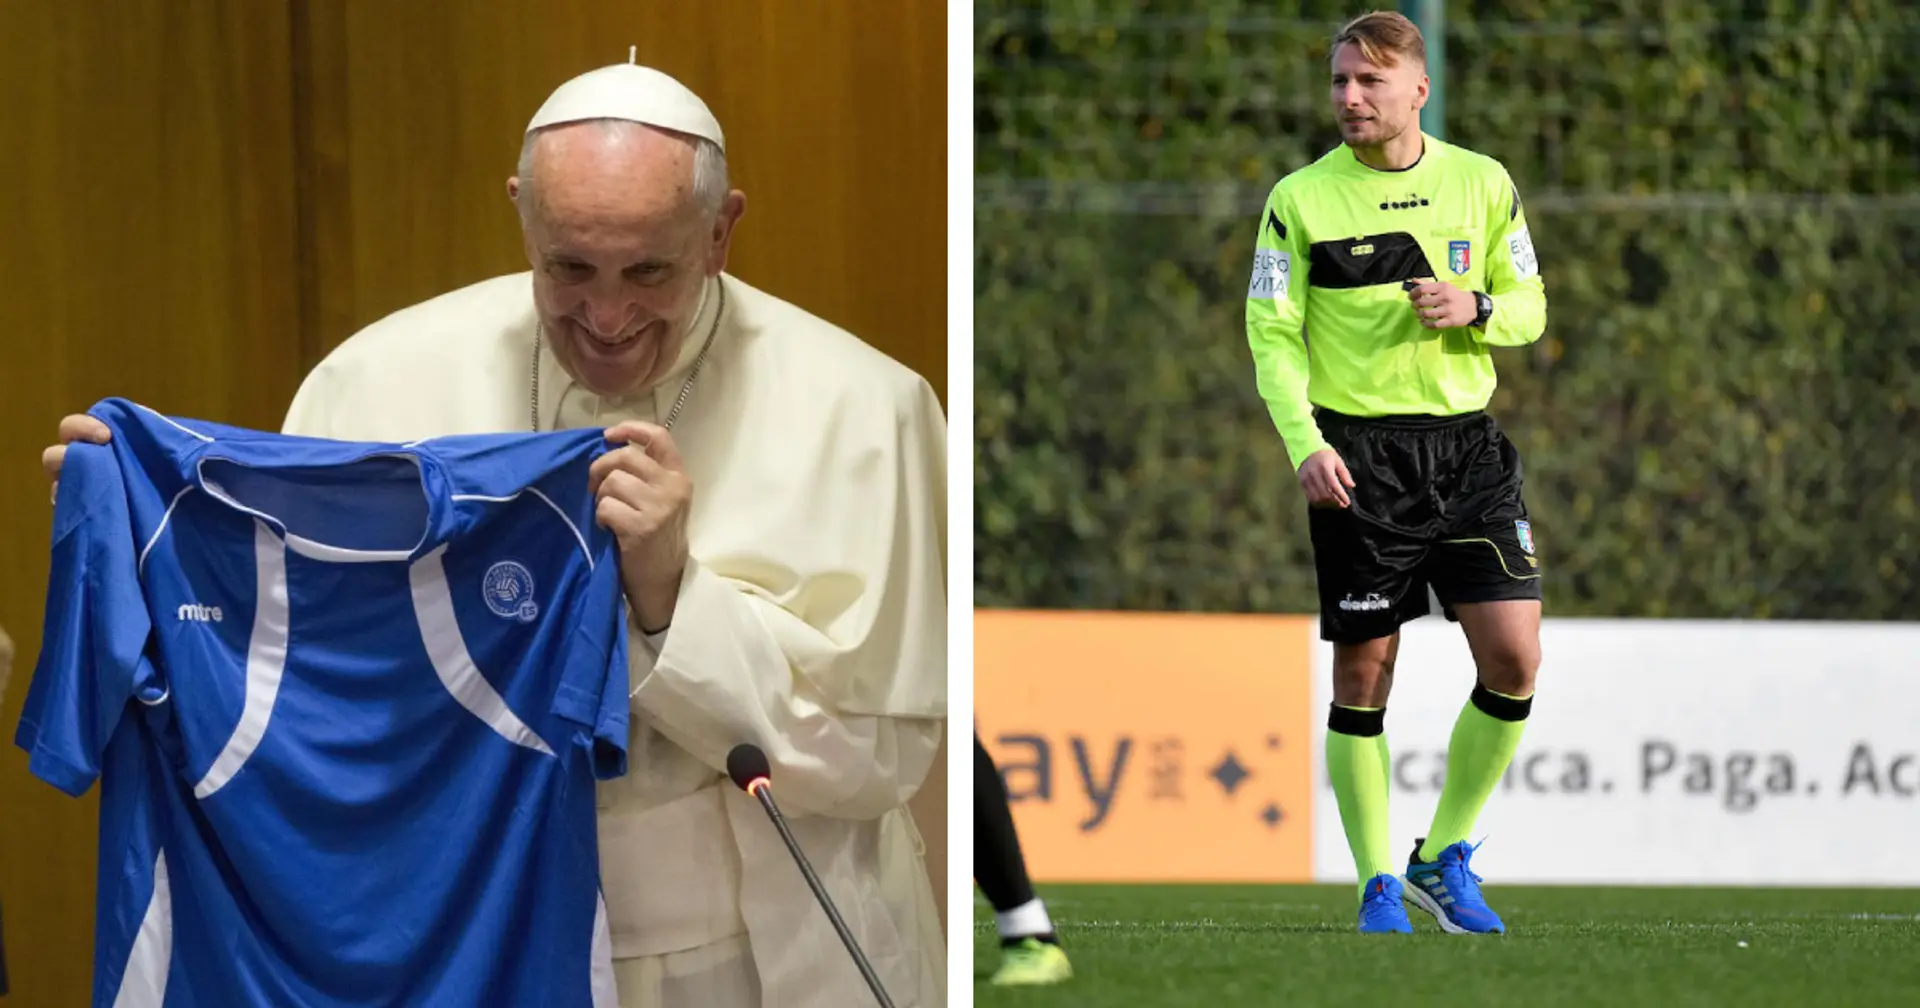 Euro 2020 winner Ciro Immobile referees match between Lazio and Vatican